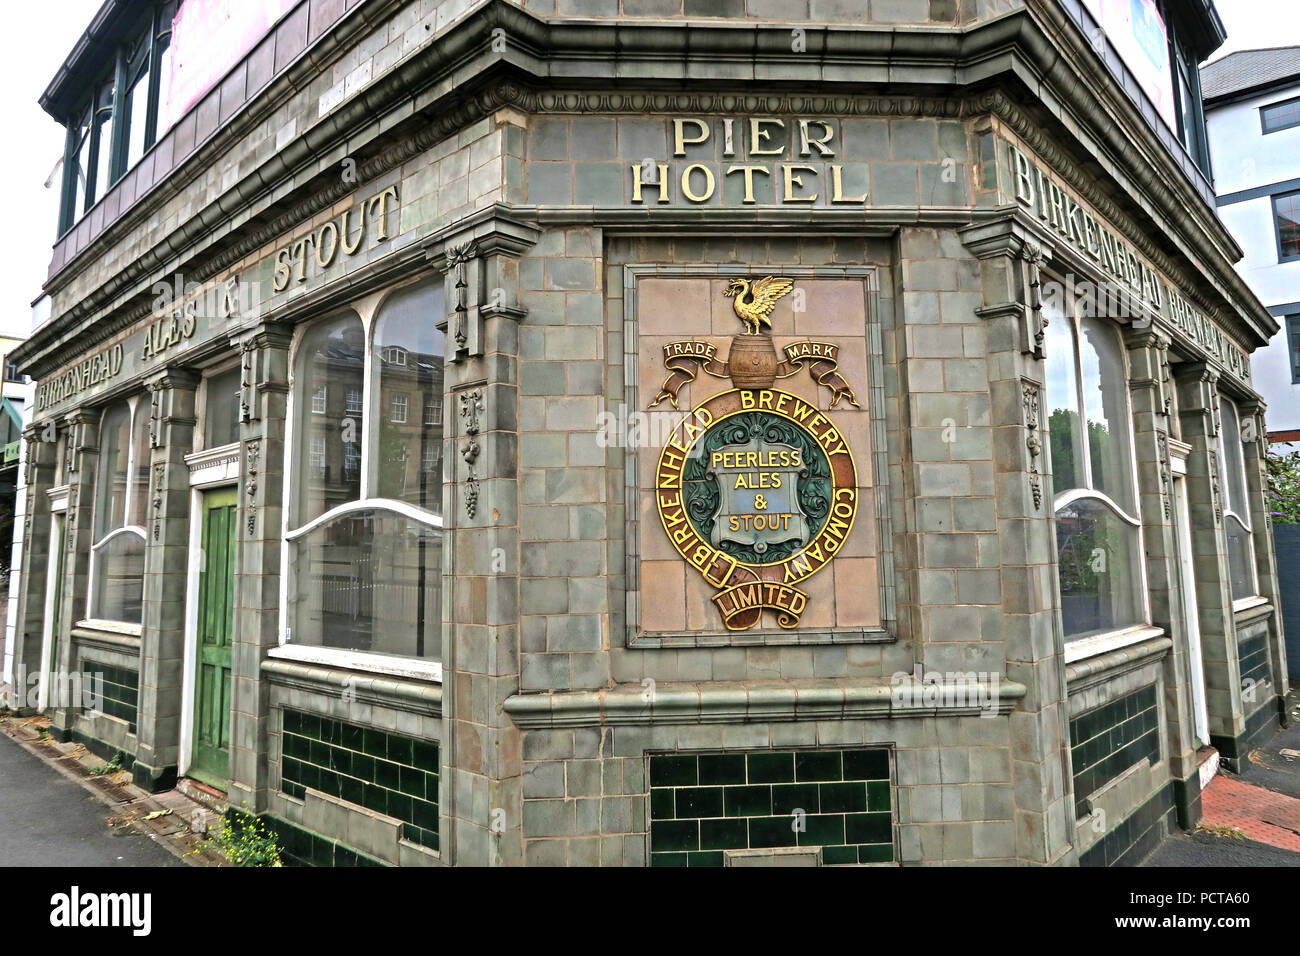 Der Pier Hotel, Birkenhead Zentrale, Birkenhead, Canning Street, Birkenhead, Wirral, CH 41 6 QS Stockfoto